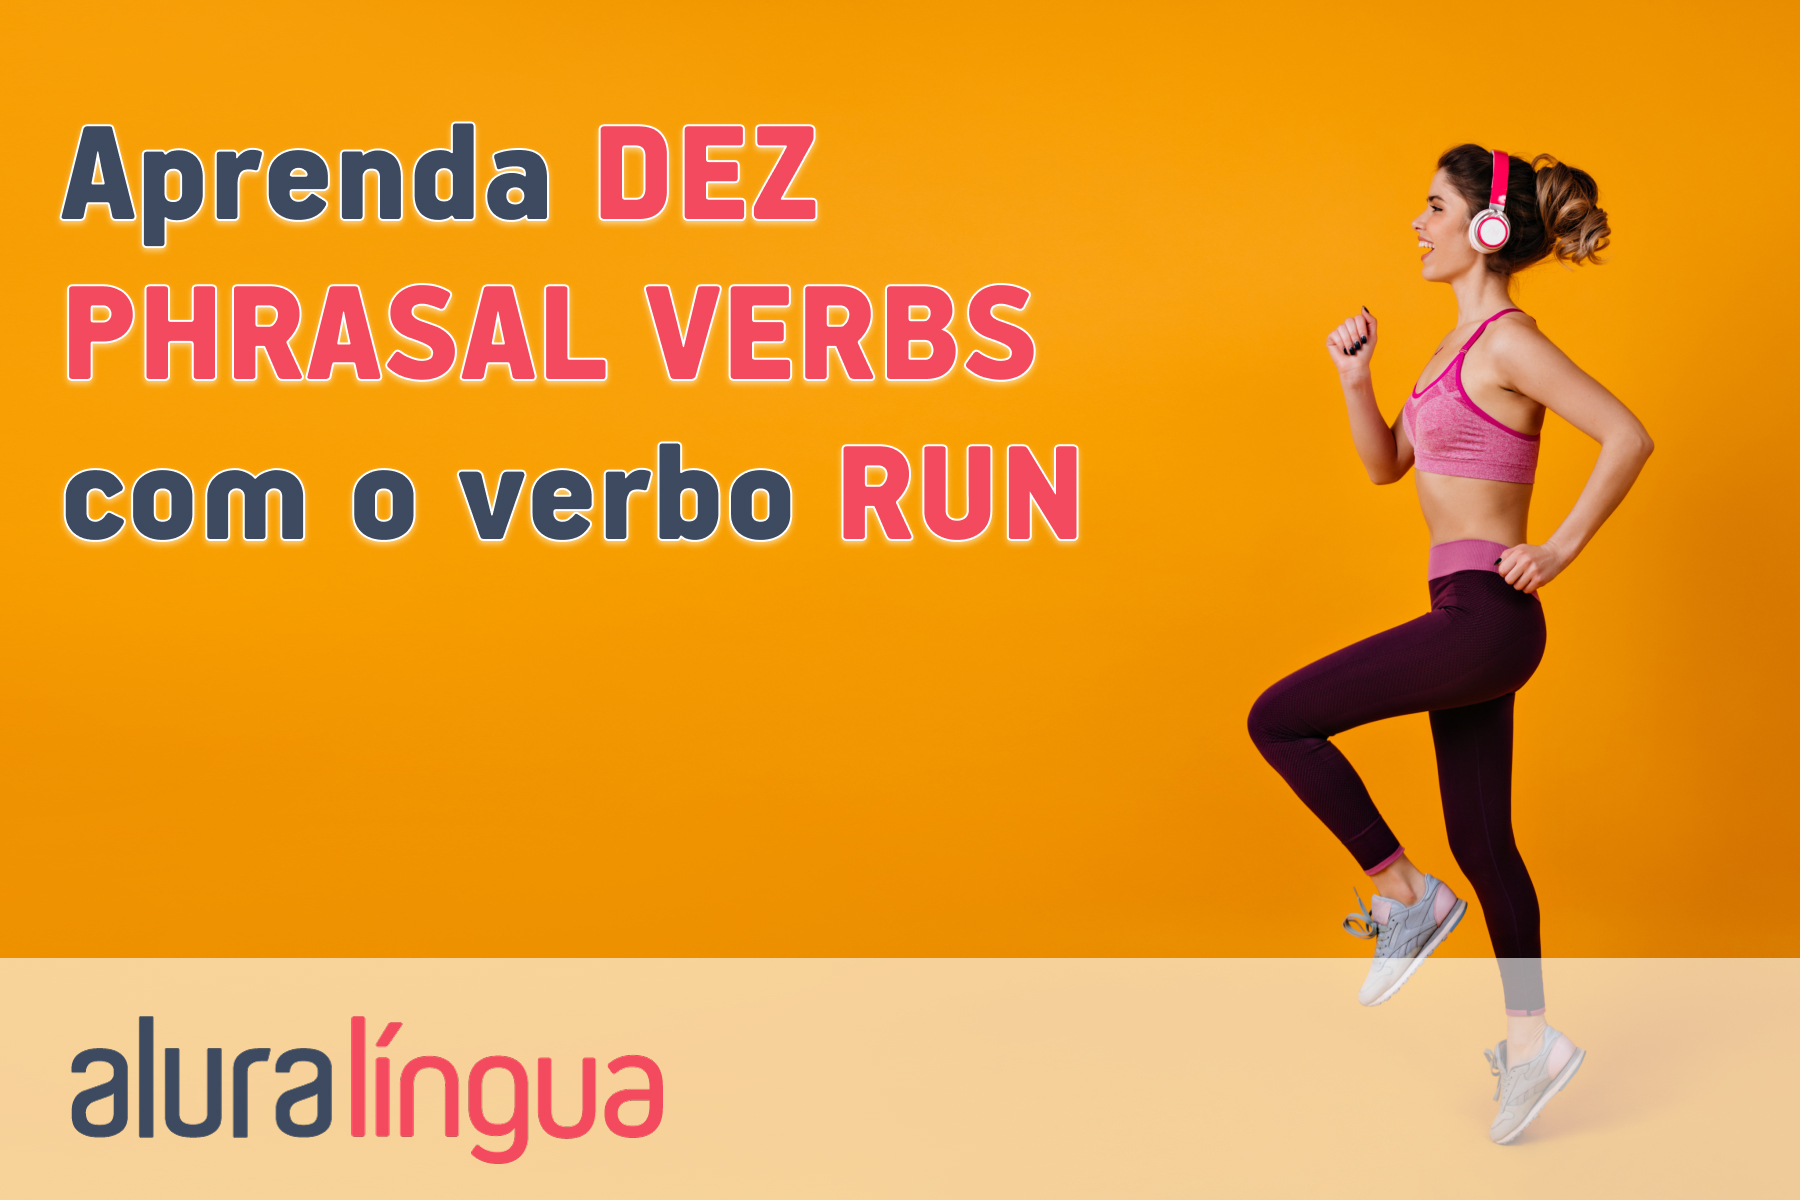 Aprenda dez phrasal verbs com o verbo run #inset